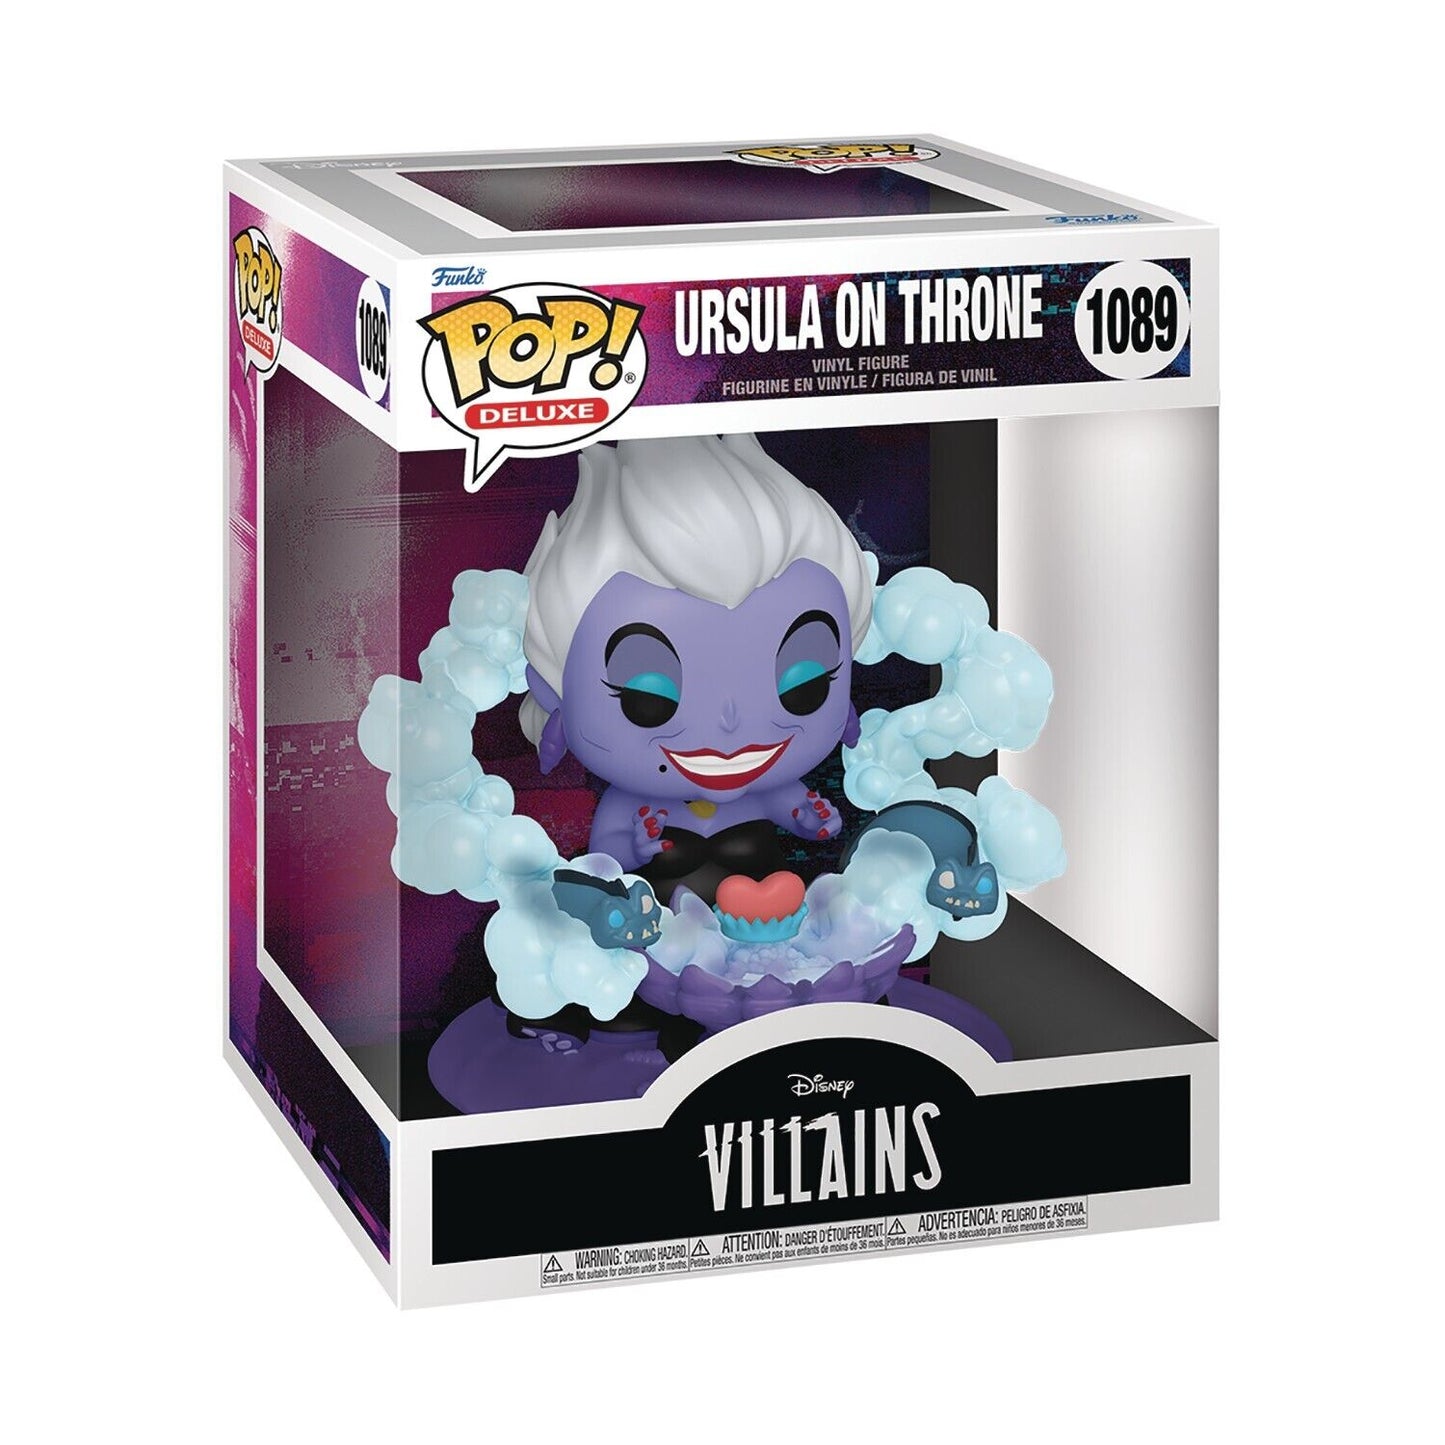 FUNKO POP! DELUXE: Disney Villains: Ursula on Throne Vinyl Figure